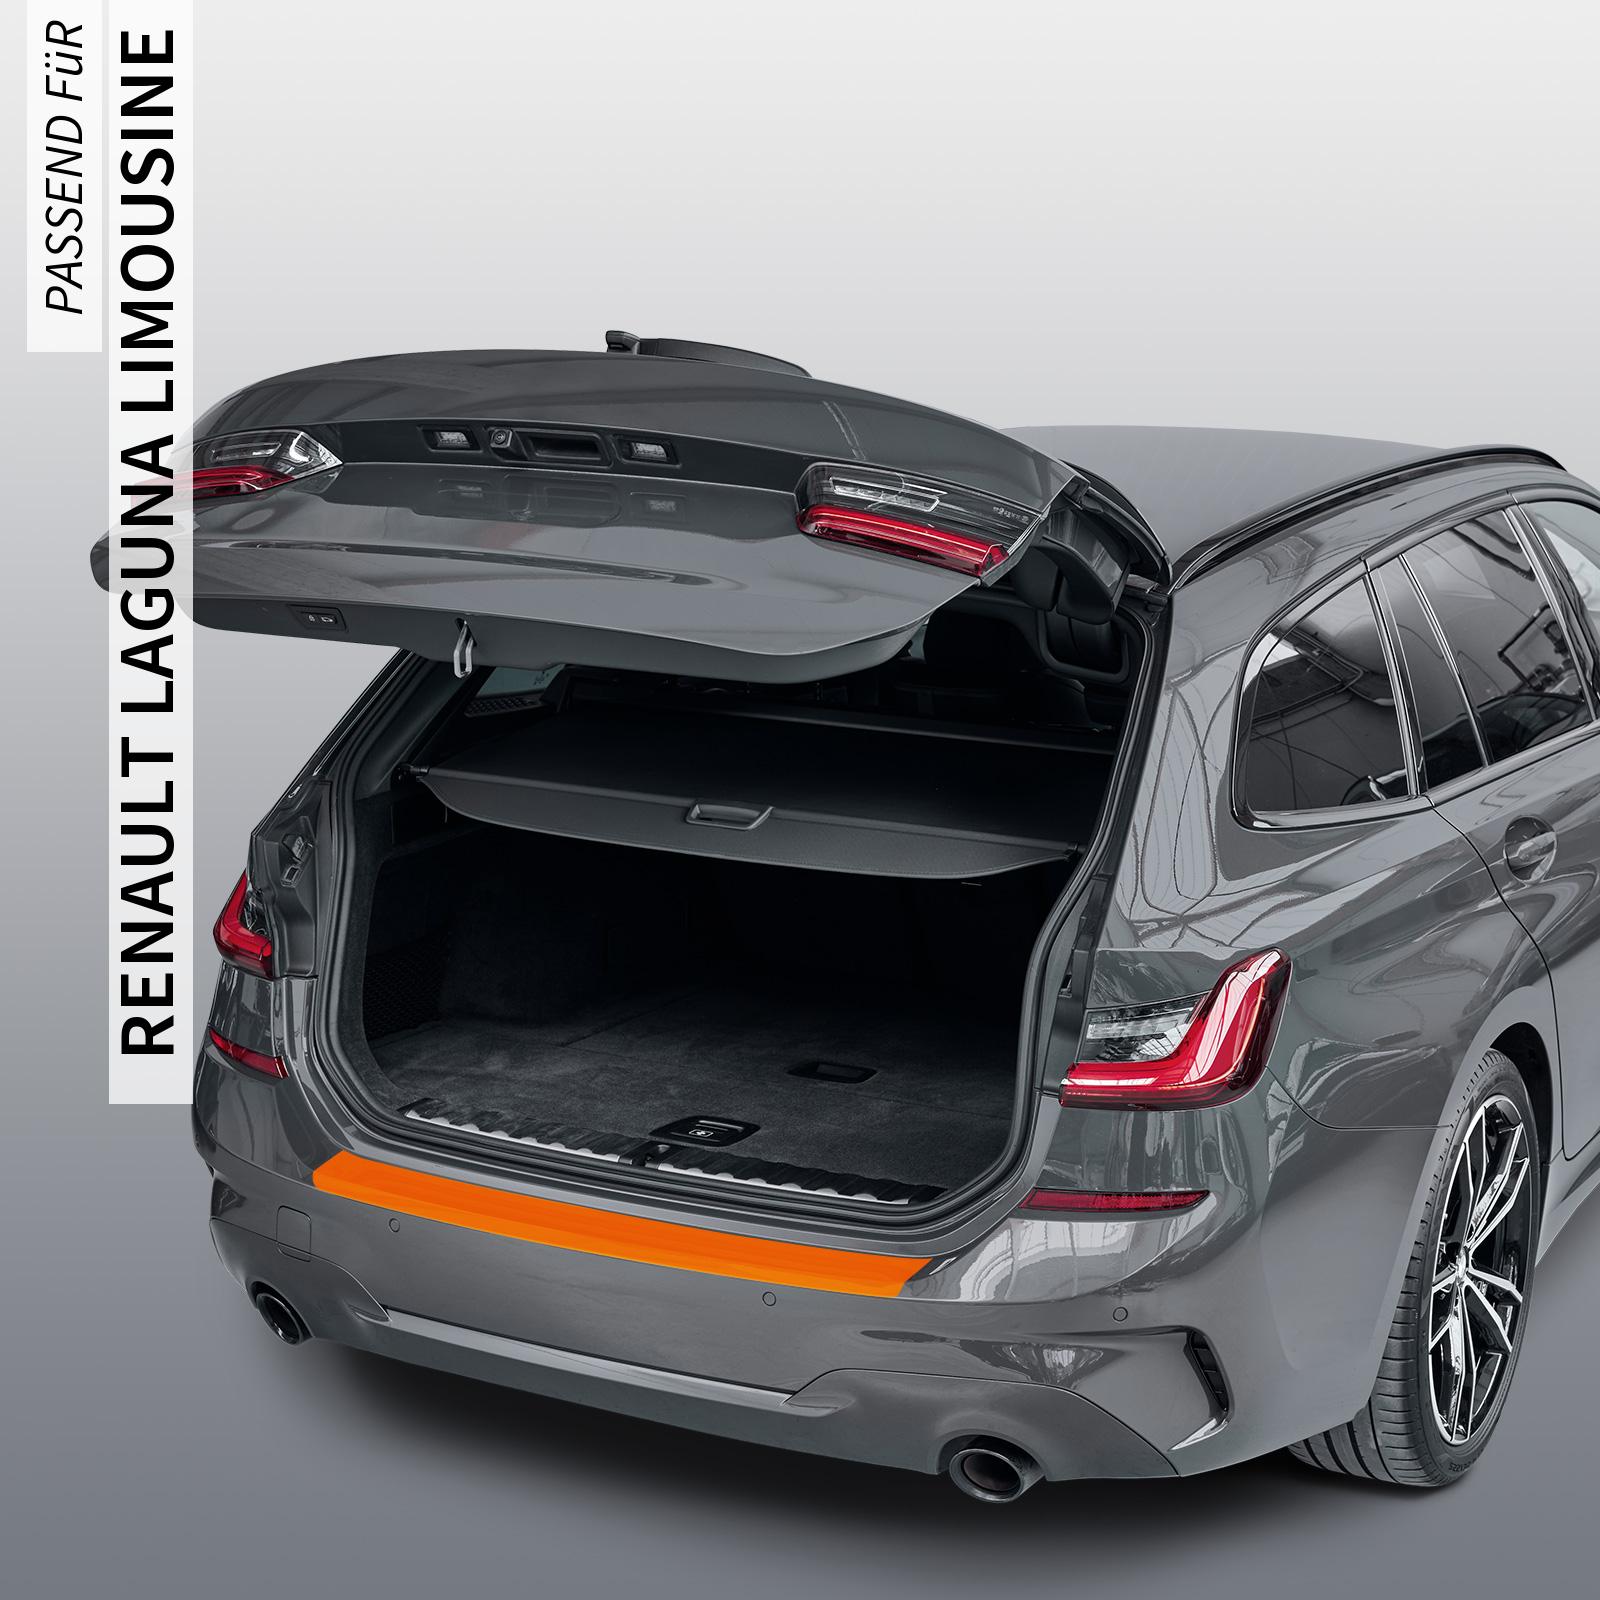 Ladekantenschutzfolie - Transparent Glatt MATT 110 µm stark  für Renault Laguna Limousine (III) Typ T, Bj. 04/2008-2015